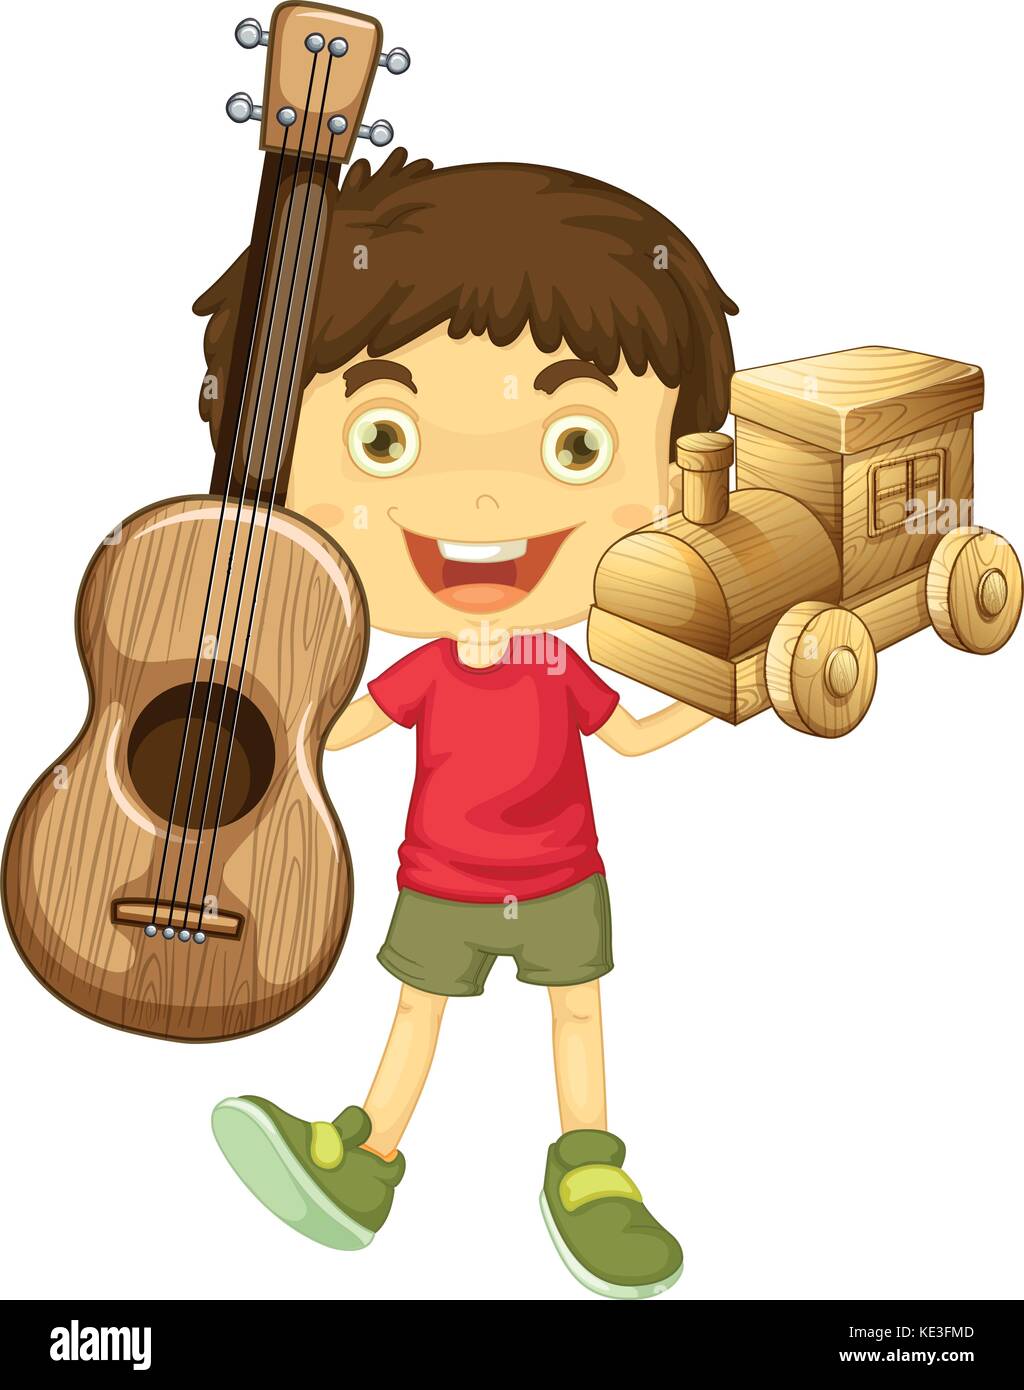 Little boy holding wooden toys illustration Stock Vector